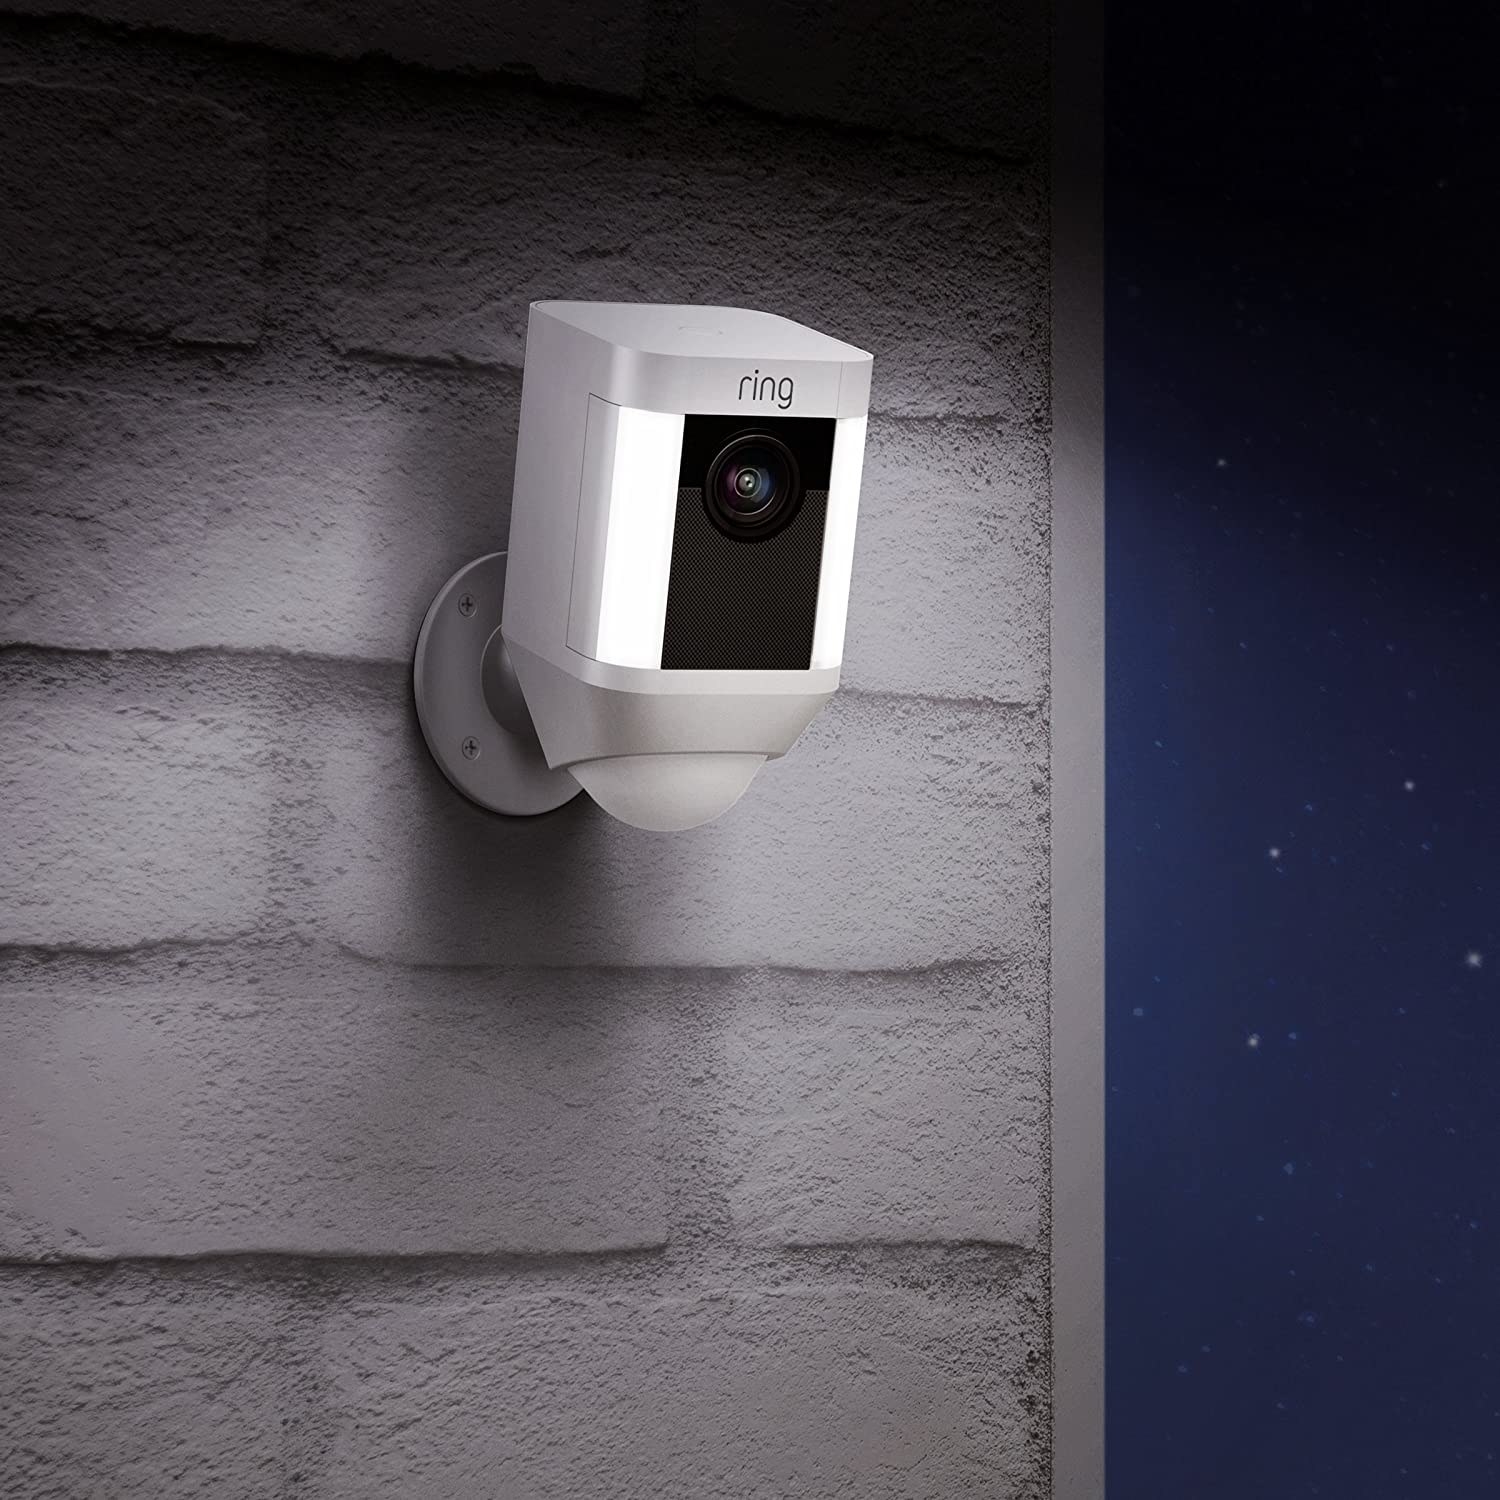 a ring camera mounted on a wall at night